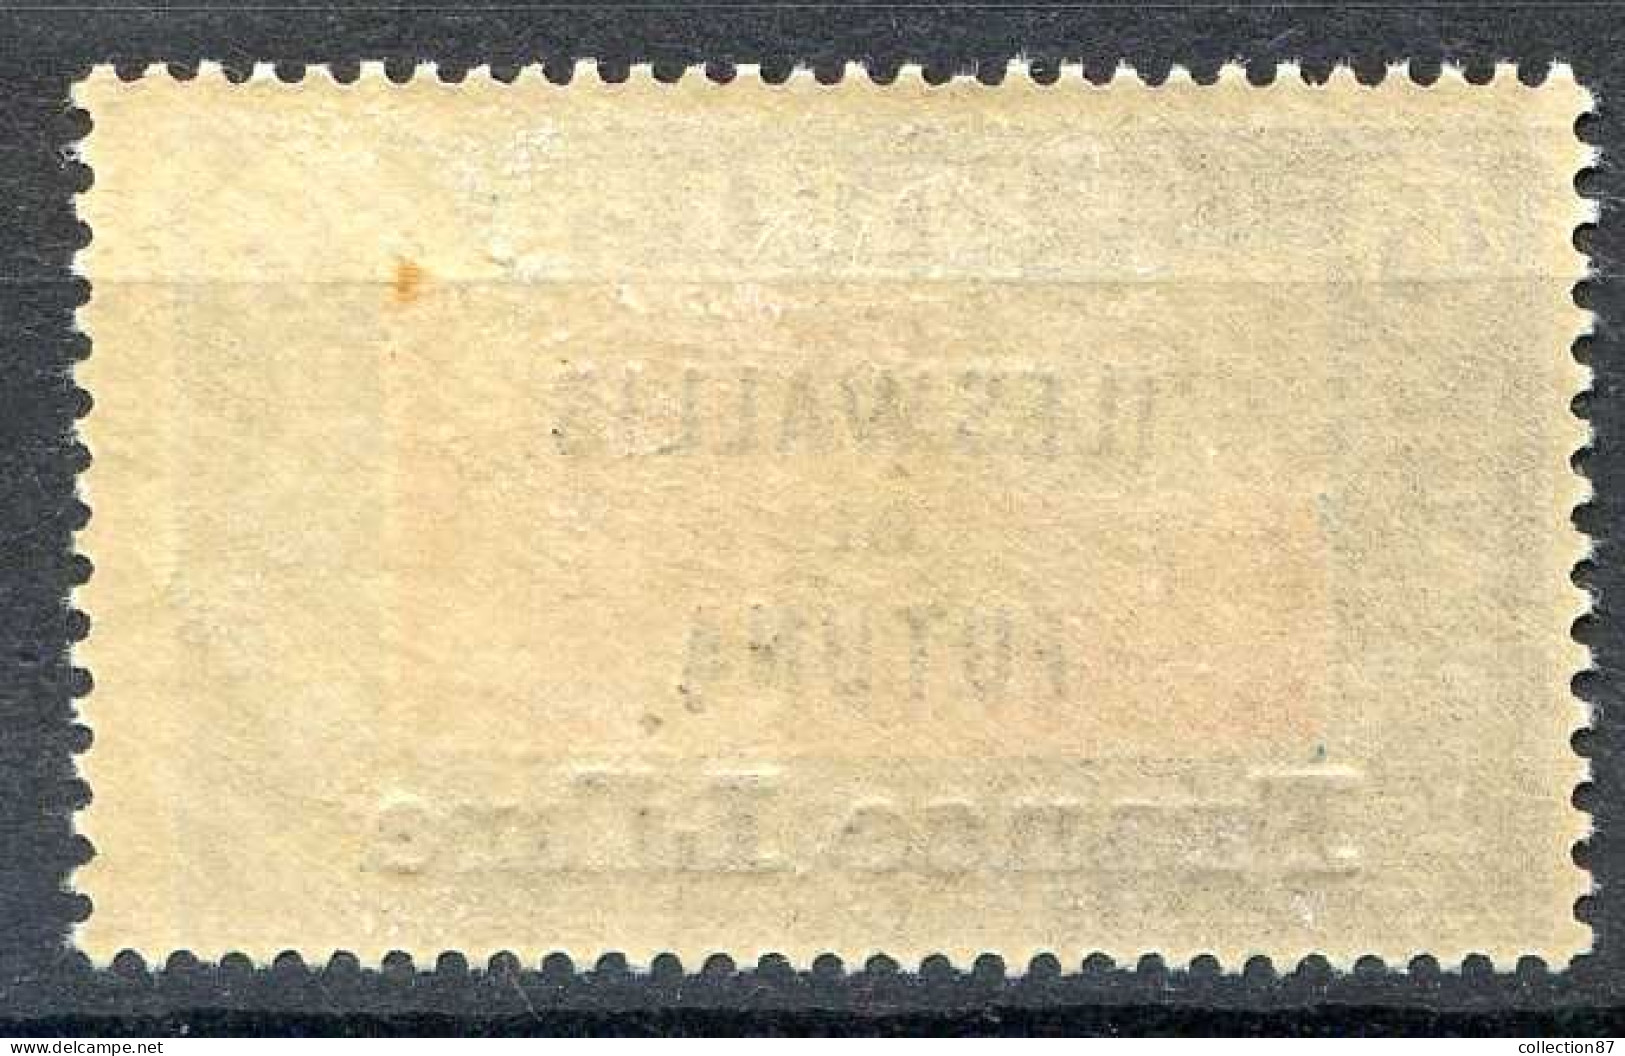 REF 086 > WALLIS & FUTUNA < FRANCE LIBRE N° 104 * Neuf Ch - MH * - Unused Stamps